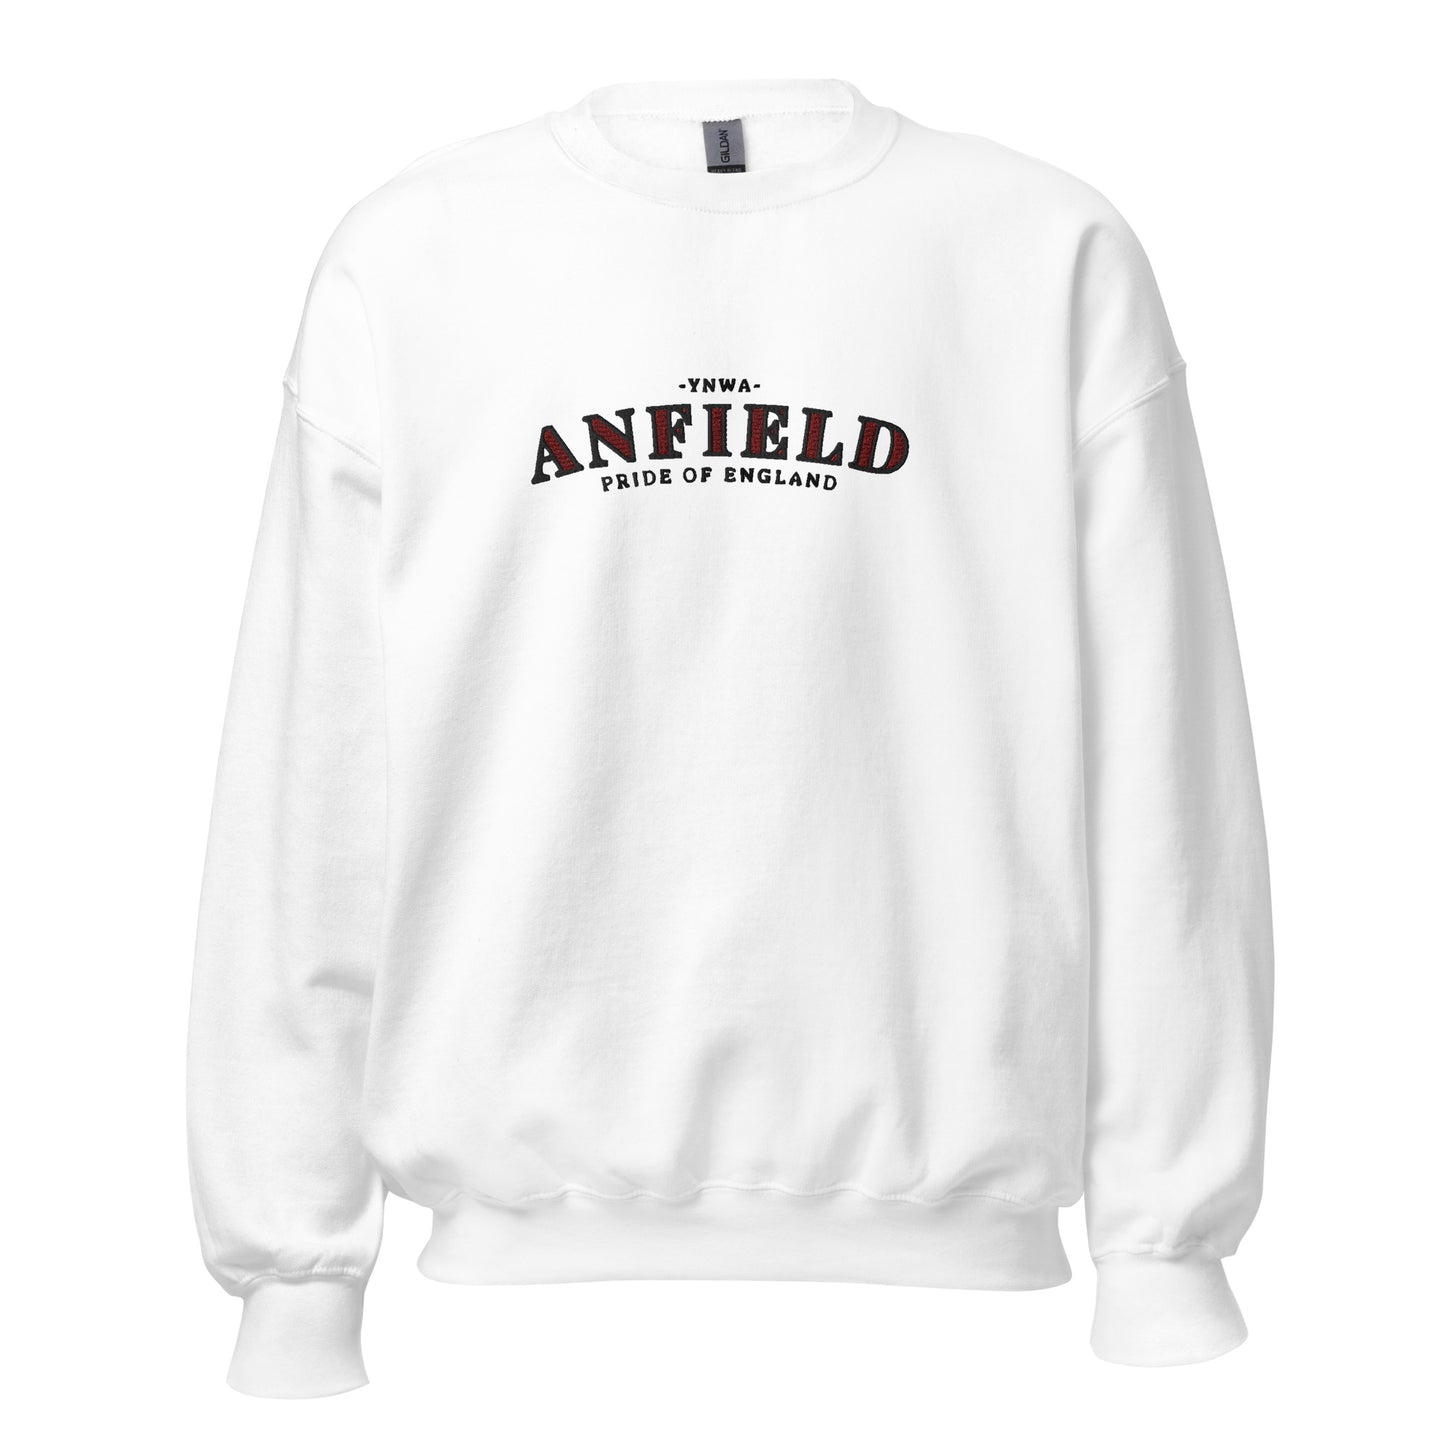 Anfield Retro Sweatshirt